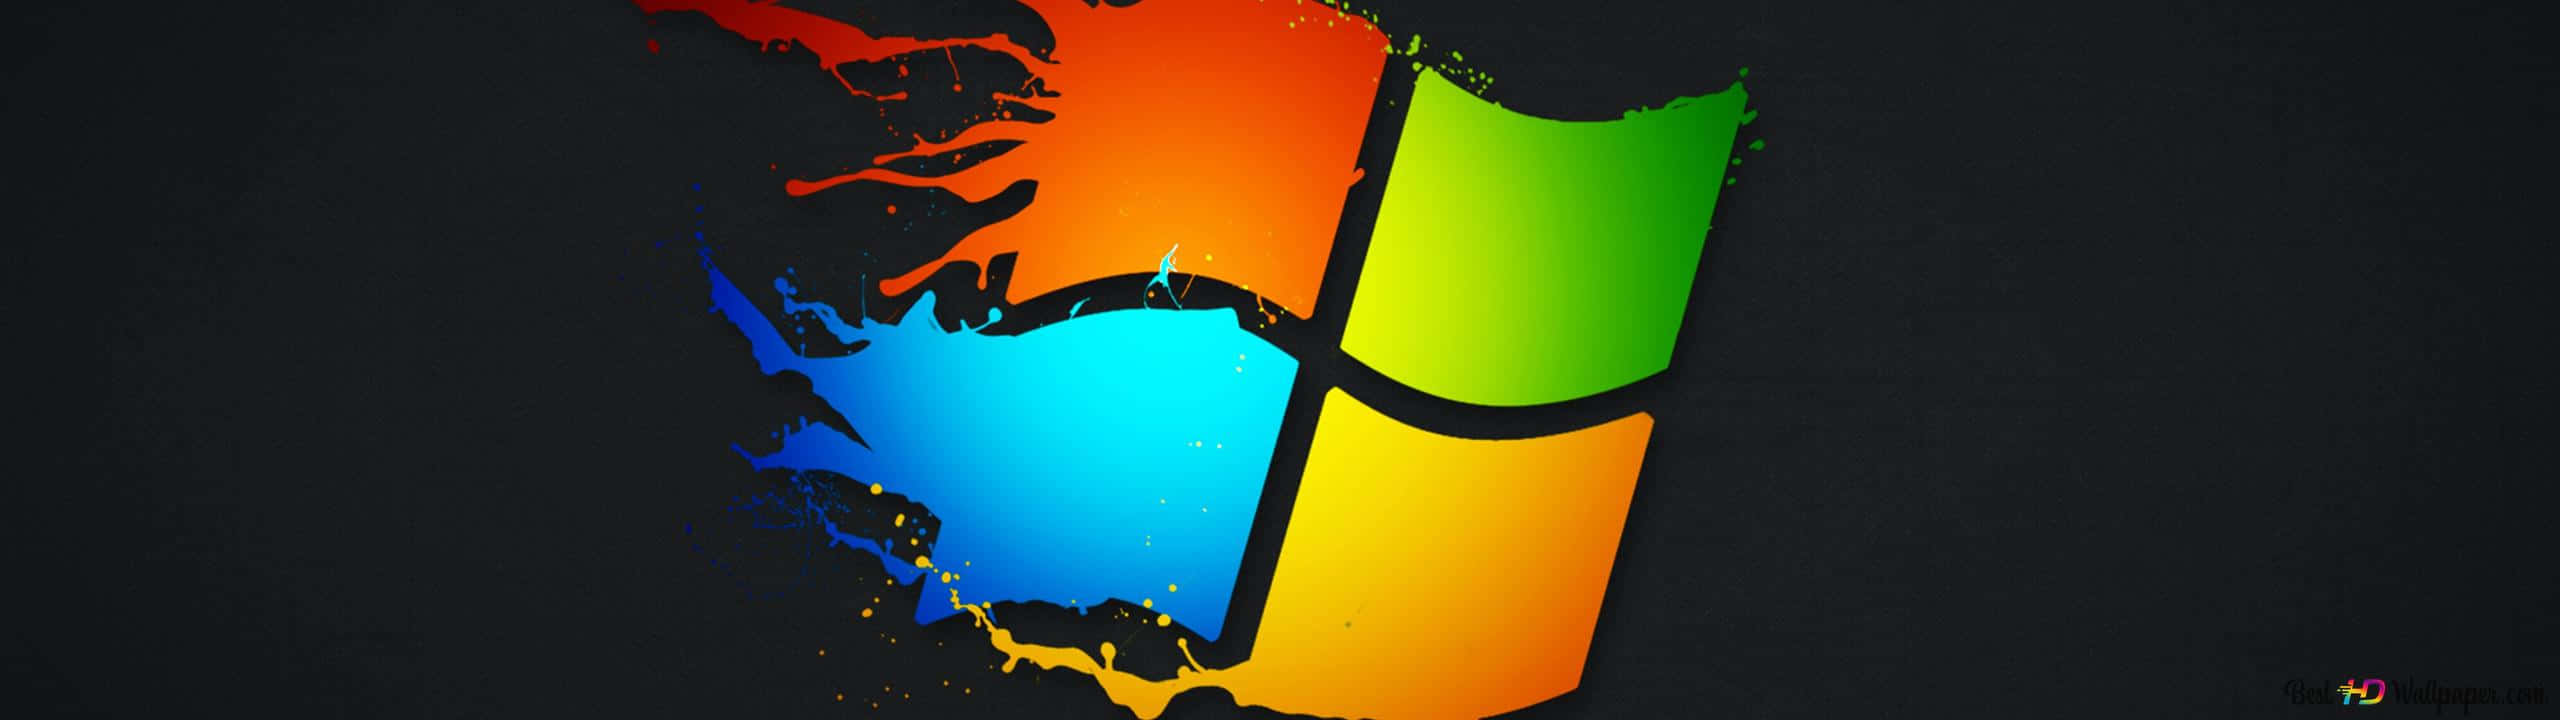 Windows Xp-logoet 2560 X 720 Wallpaper